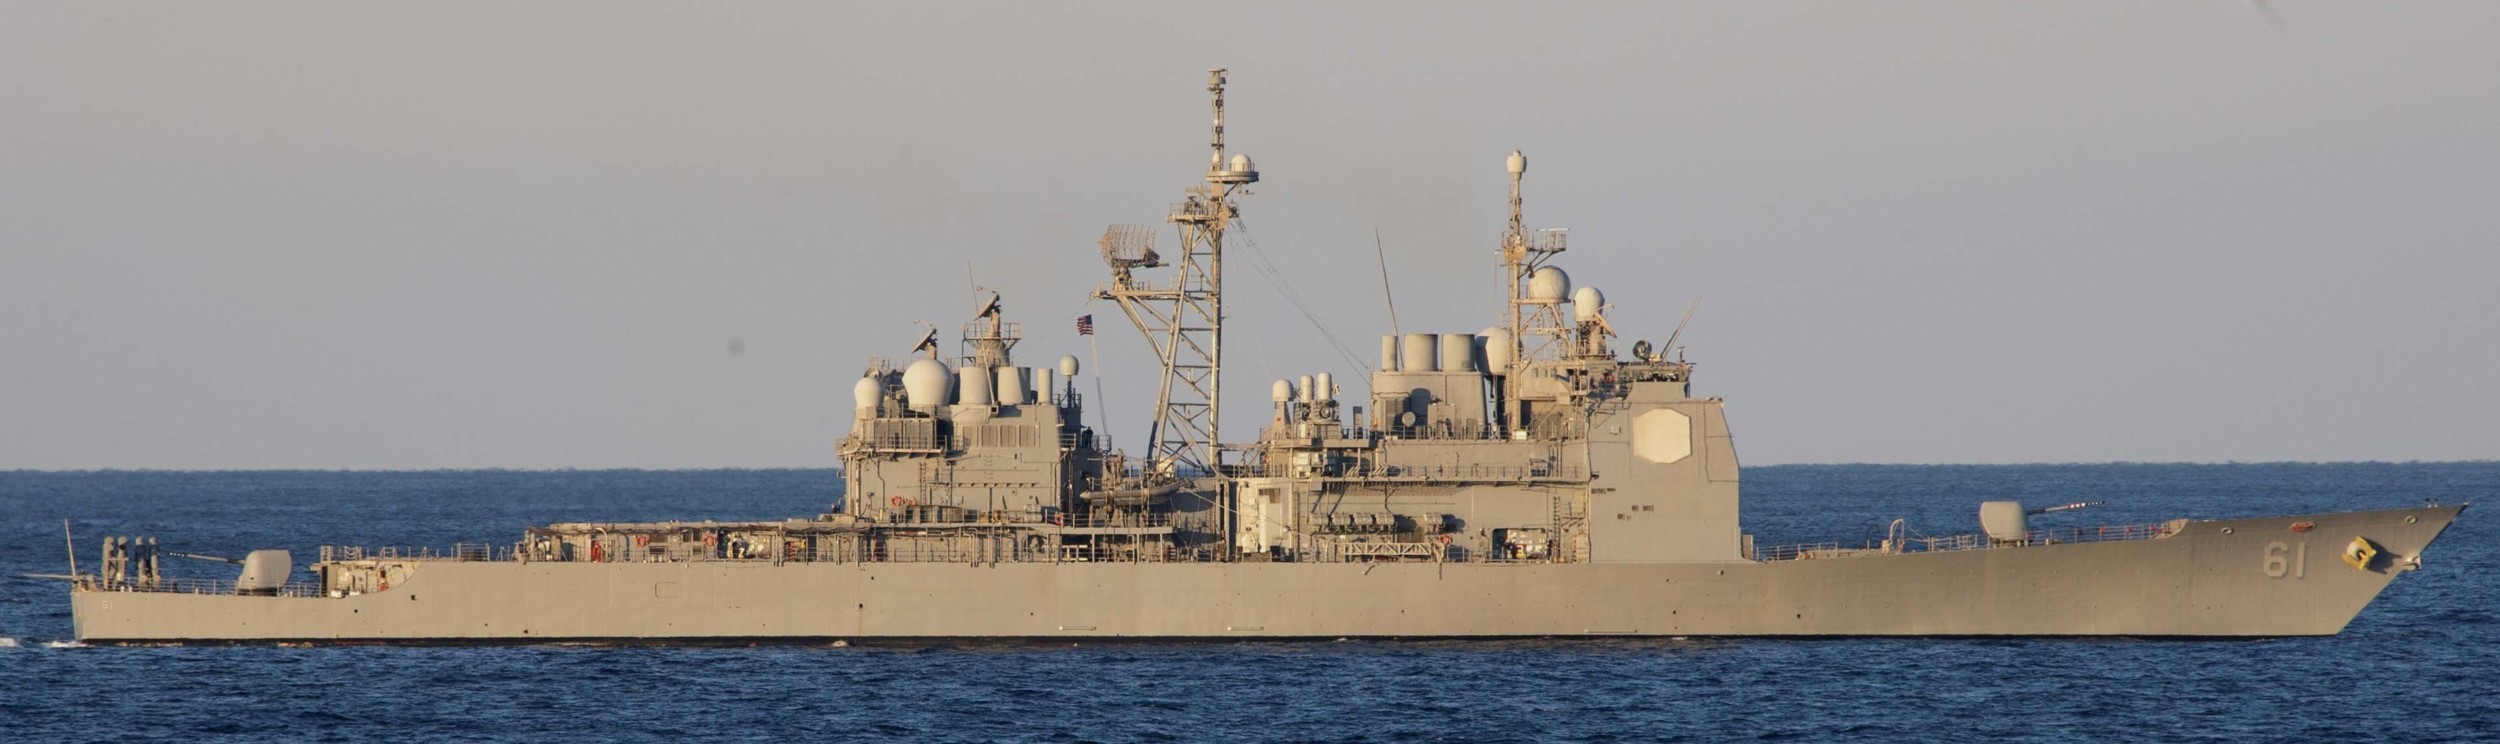 cg-61 uss monterey ticonderoga class guided missile cruiser aegis us navy 107